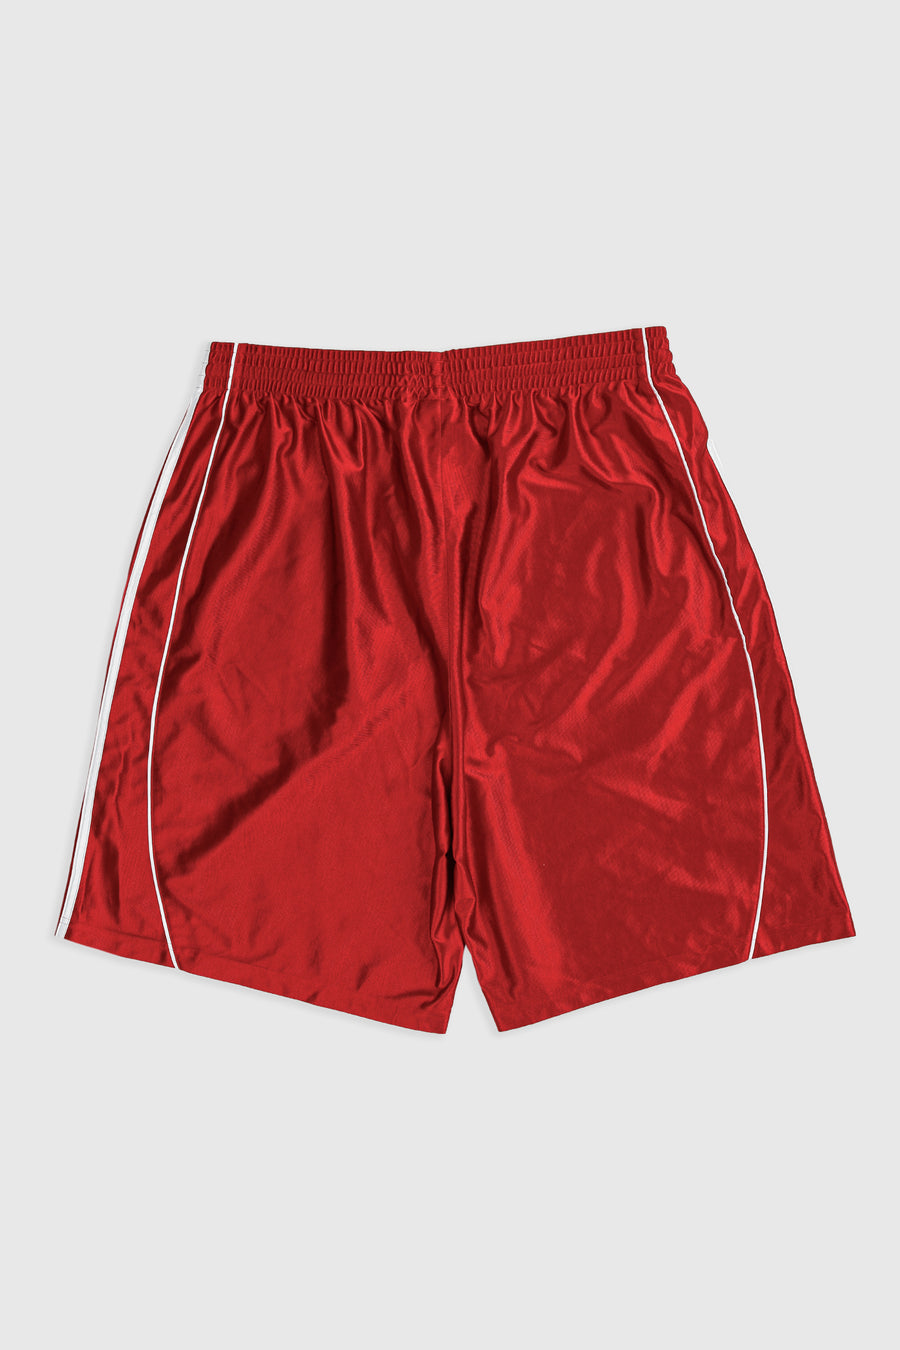 Vintage Adidas Basketball Shorts - XXL